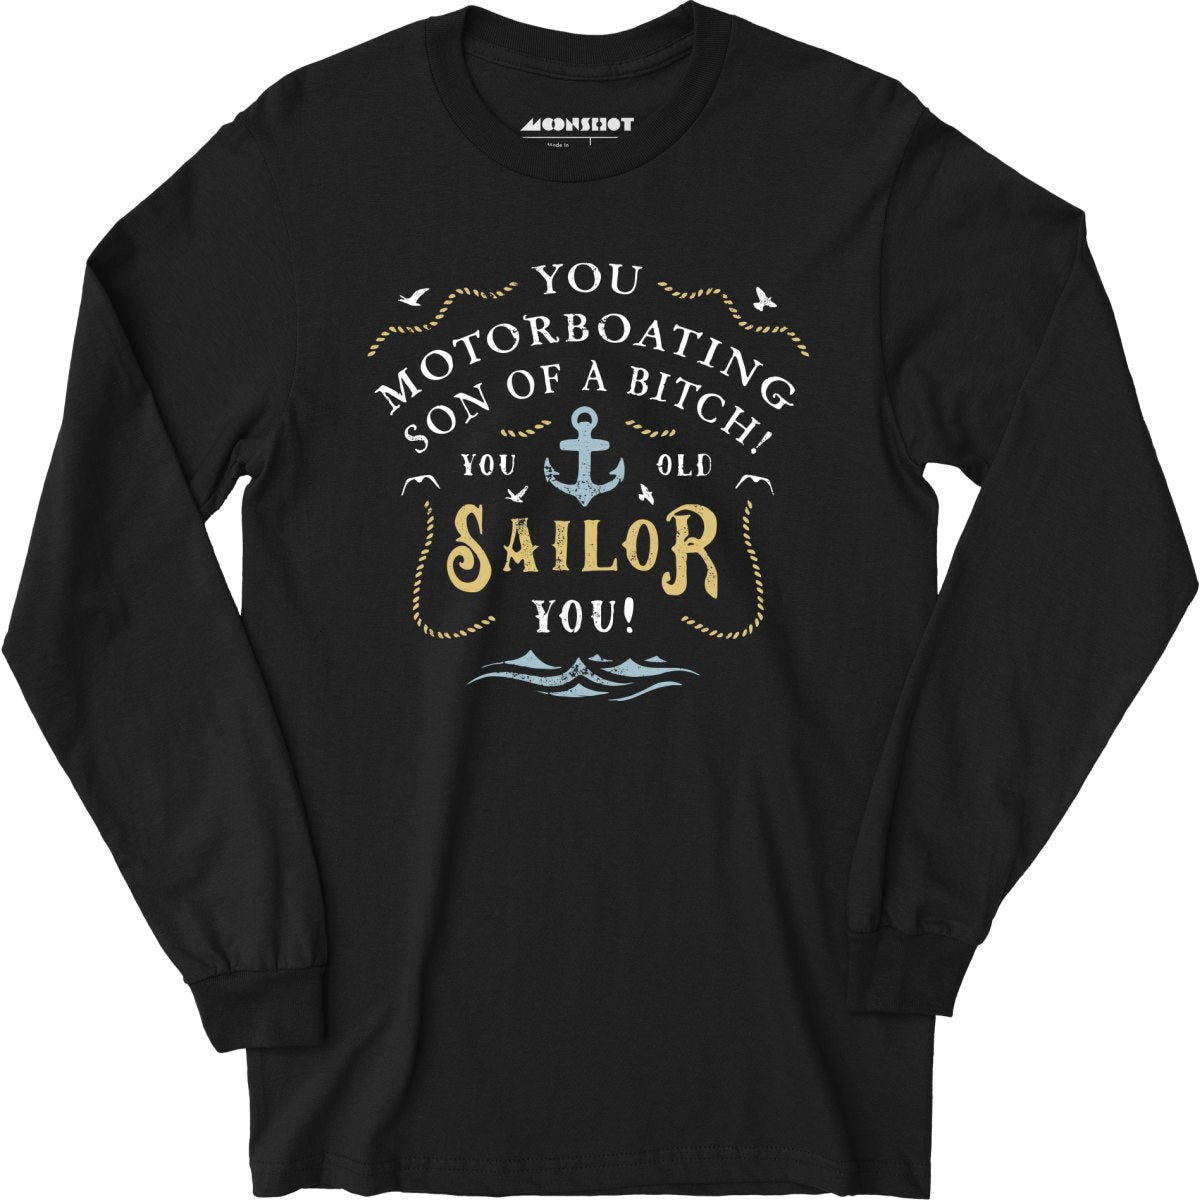 You Old Sailor You - Long Sleeve T-Shirt